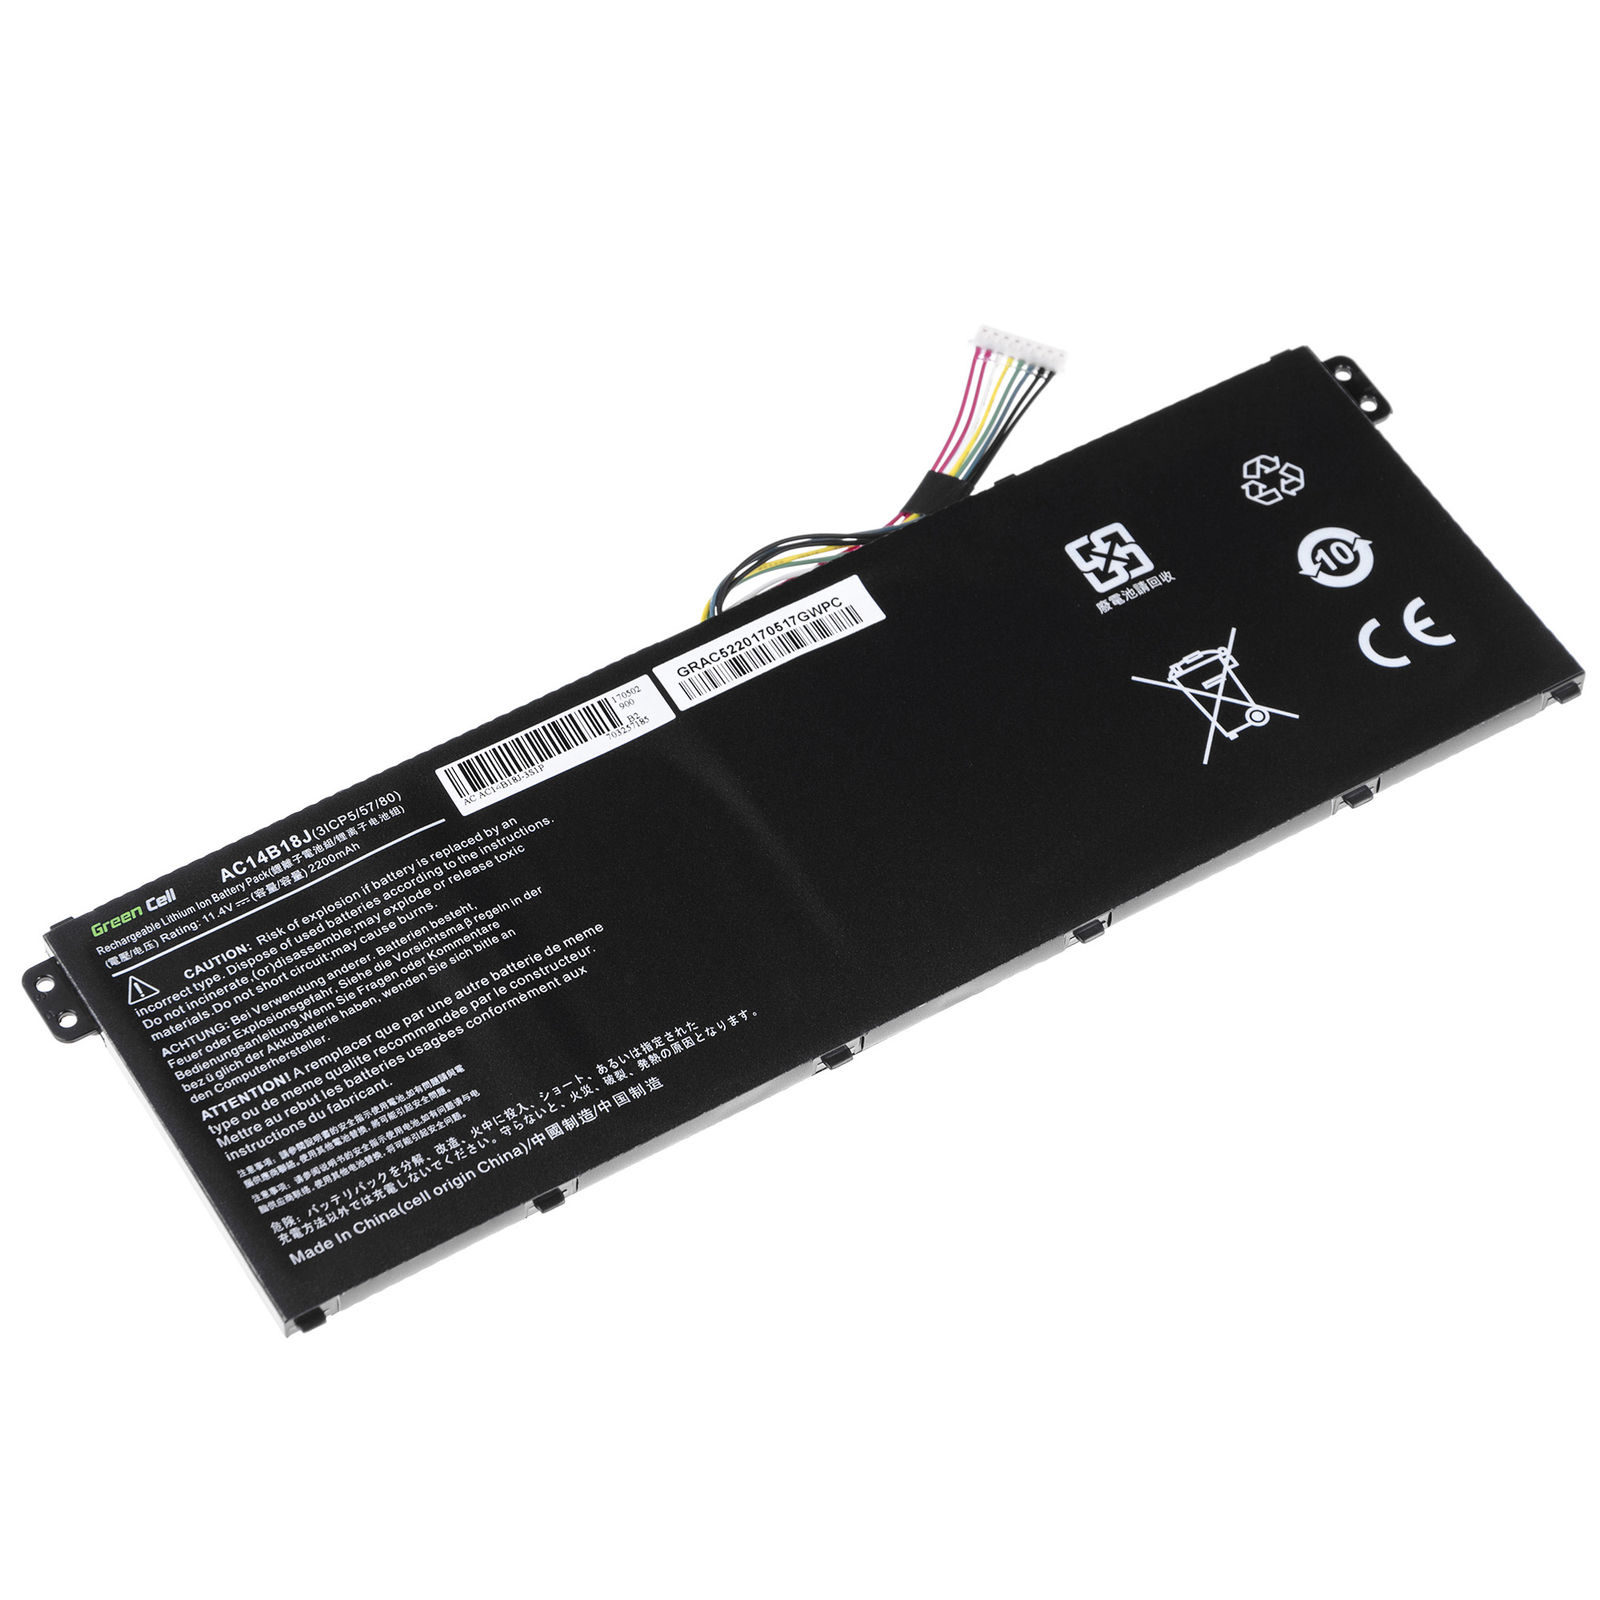 Acer Aspire E11 ES1-111 ES1-111M 2200mAh batteria compatibile